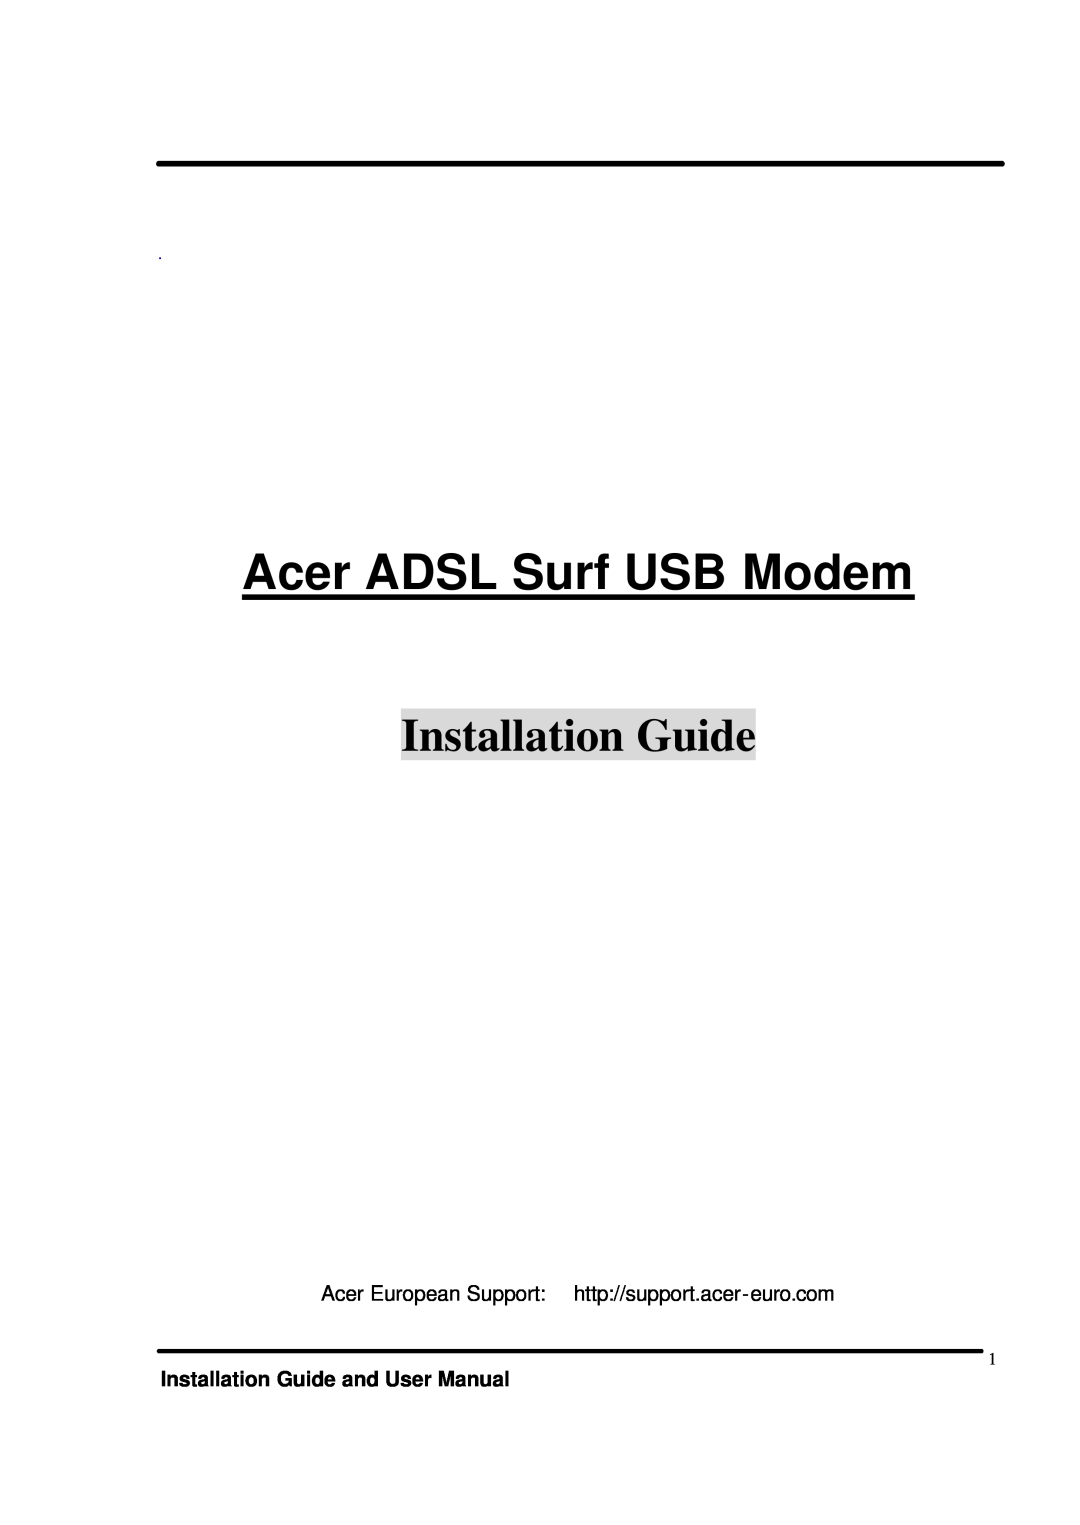 Acer user manual Installation Guide and User Manual, Acer ADSL Surf USB Modem 